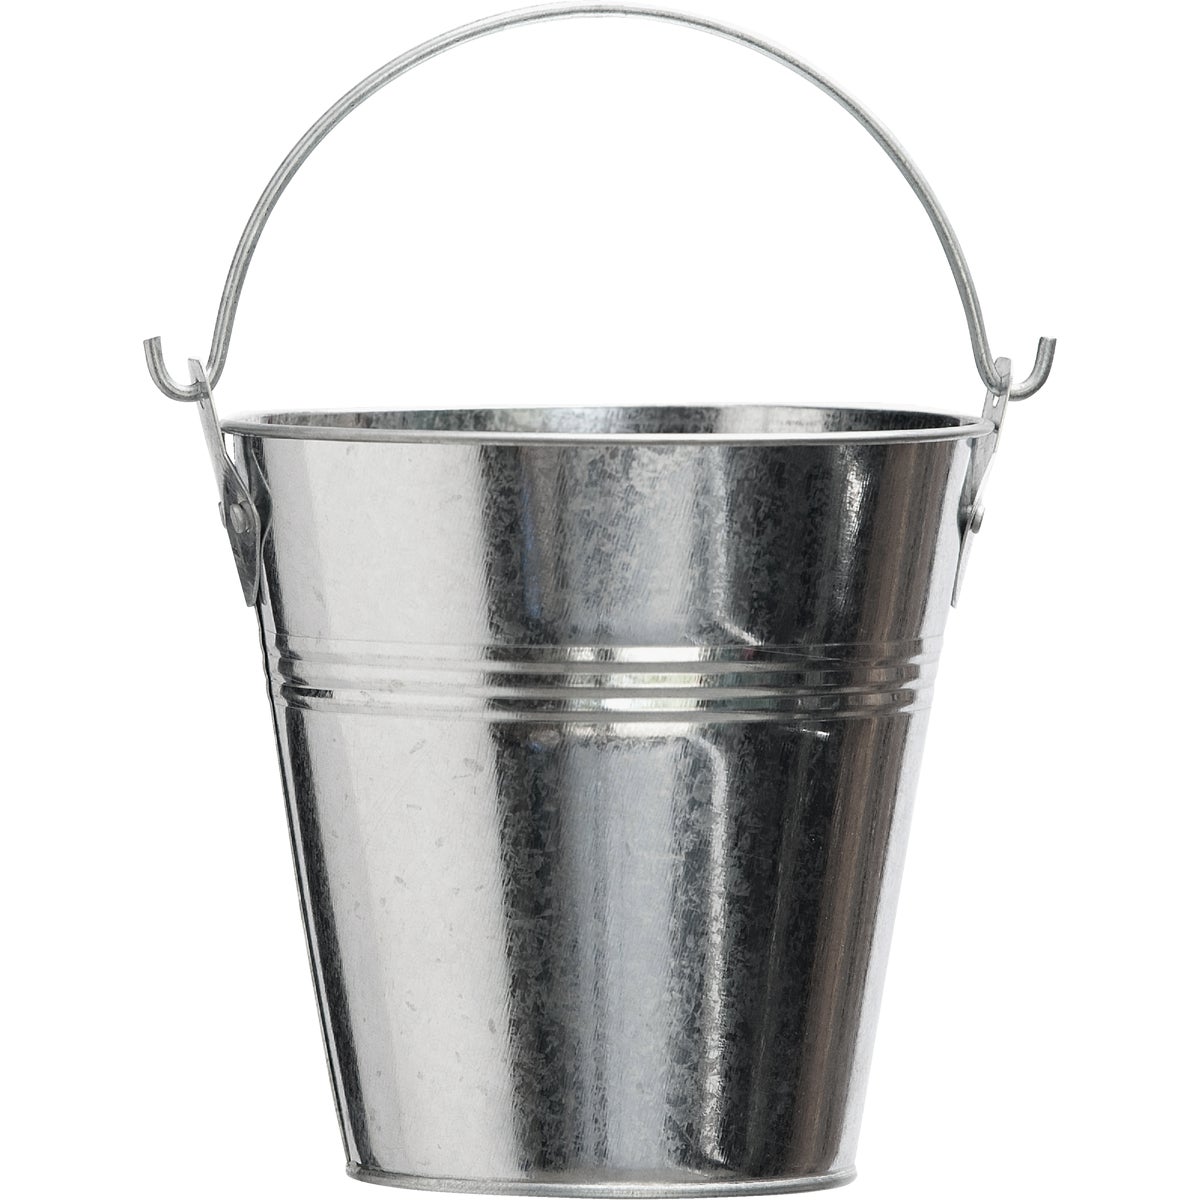 Item 801945, Durable galvanized steel drip bucket.